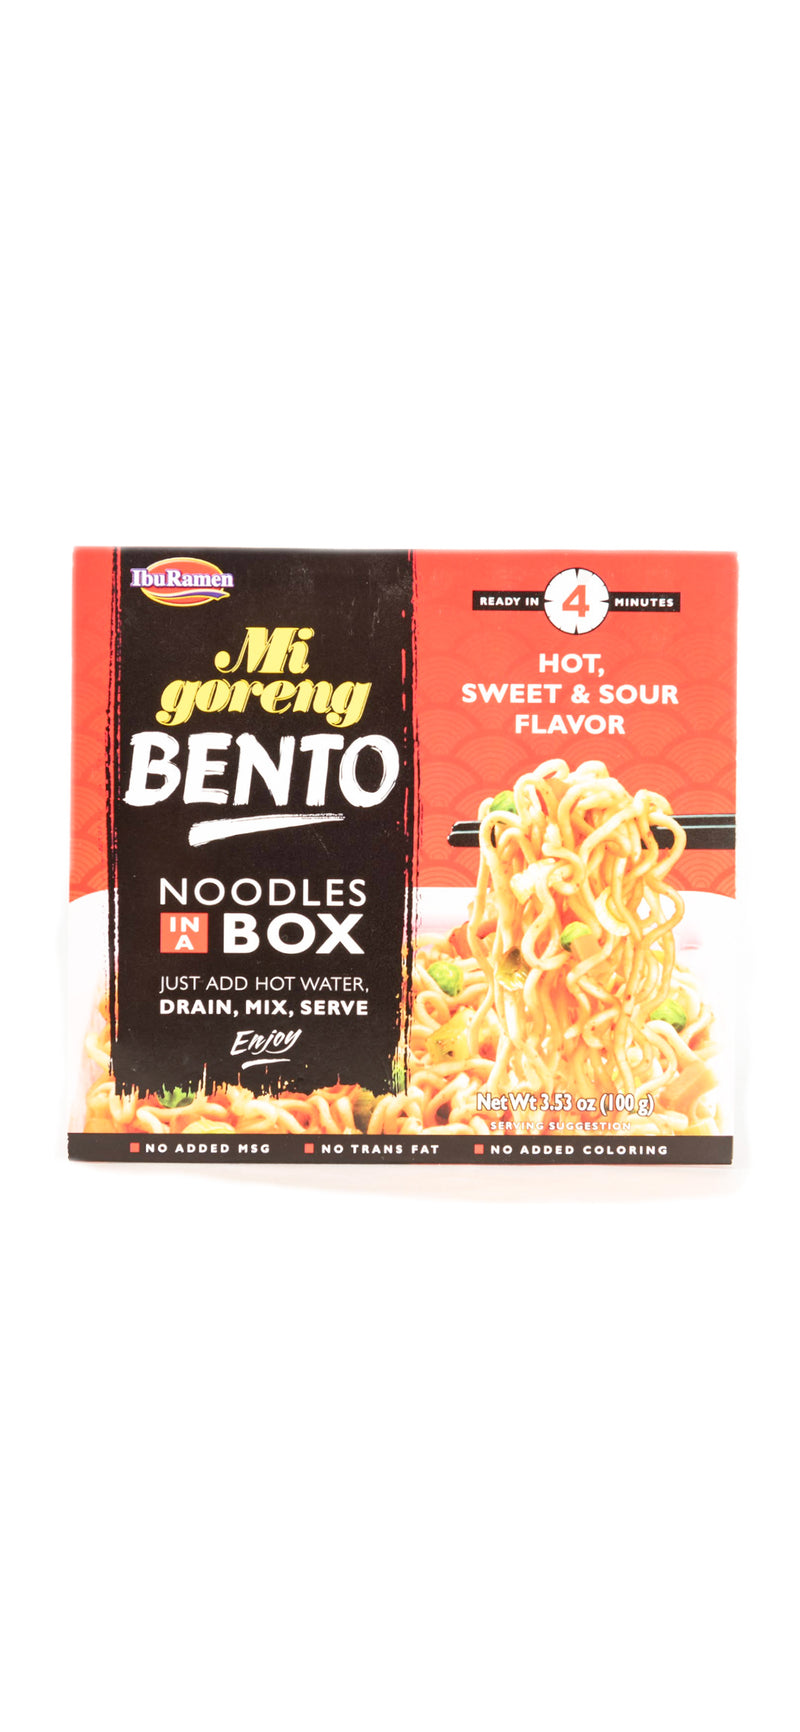 IbuRamen Mi Goreng Bento Noodles in a Box Hot, Sweet & Sour Flavor